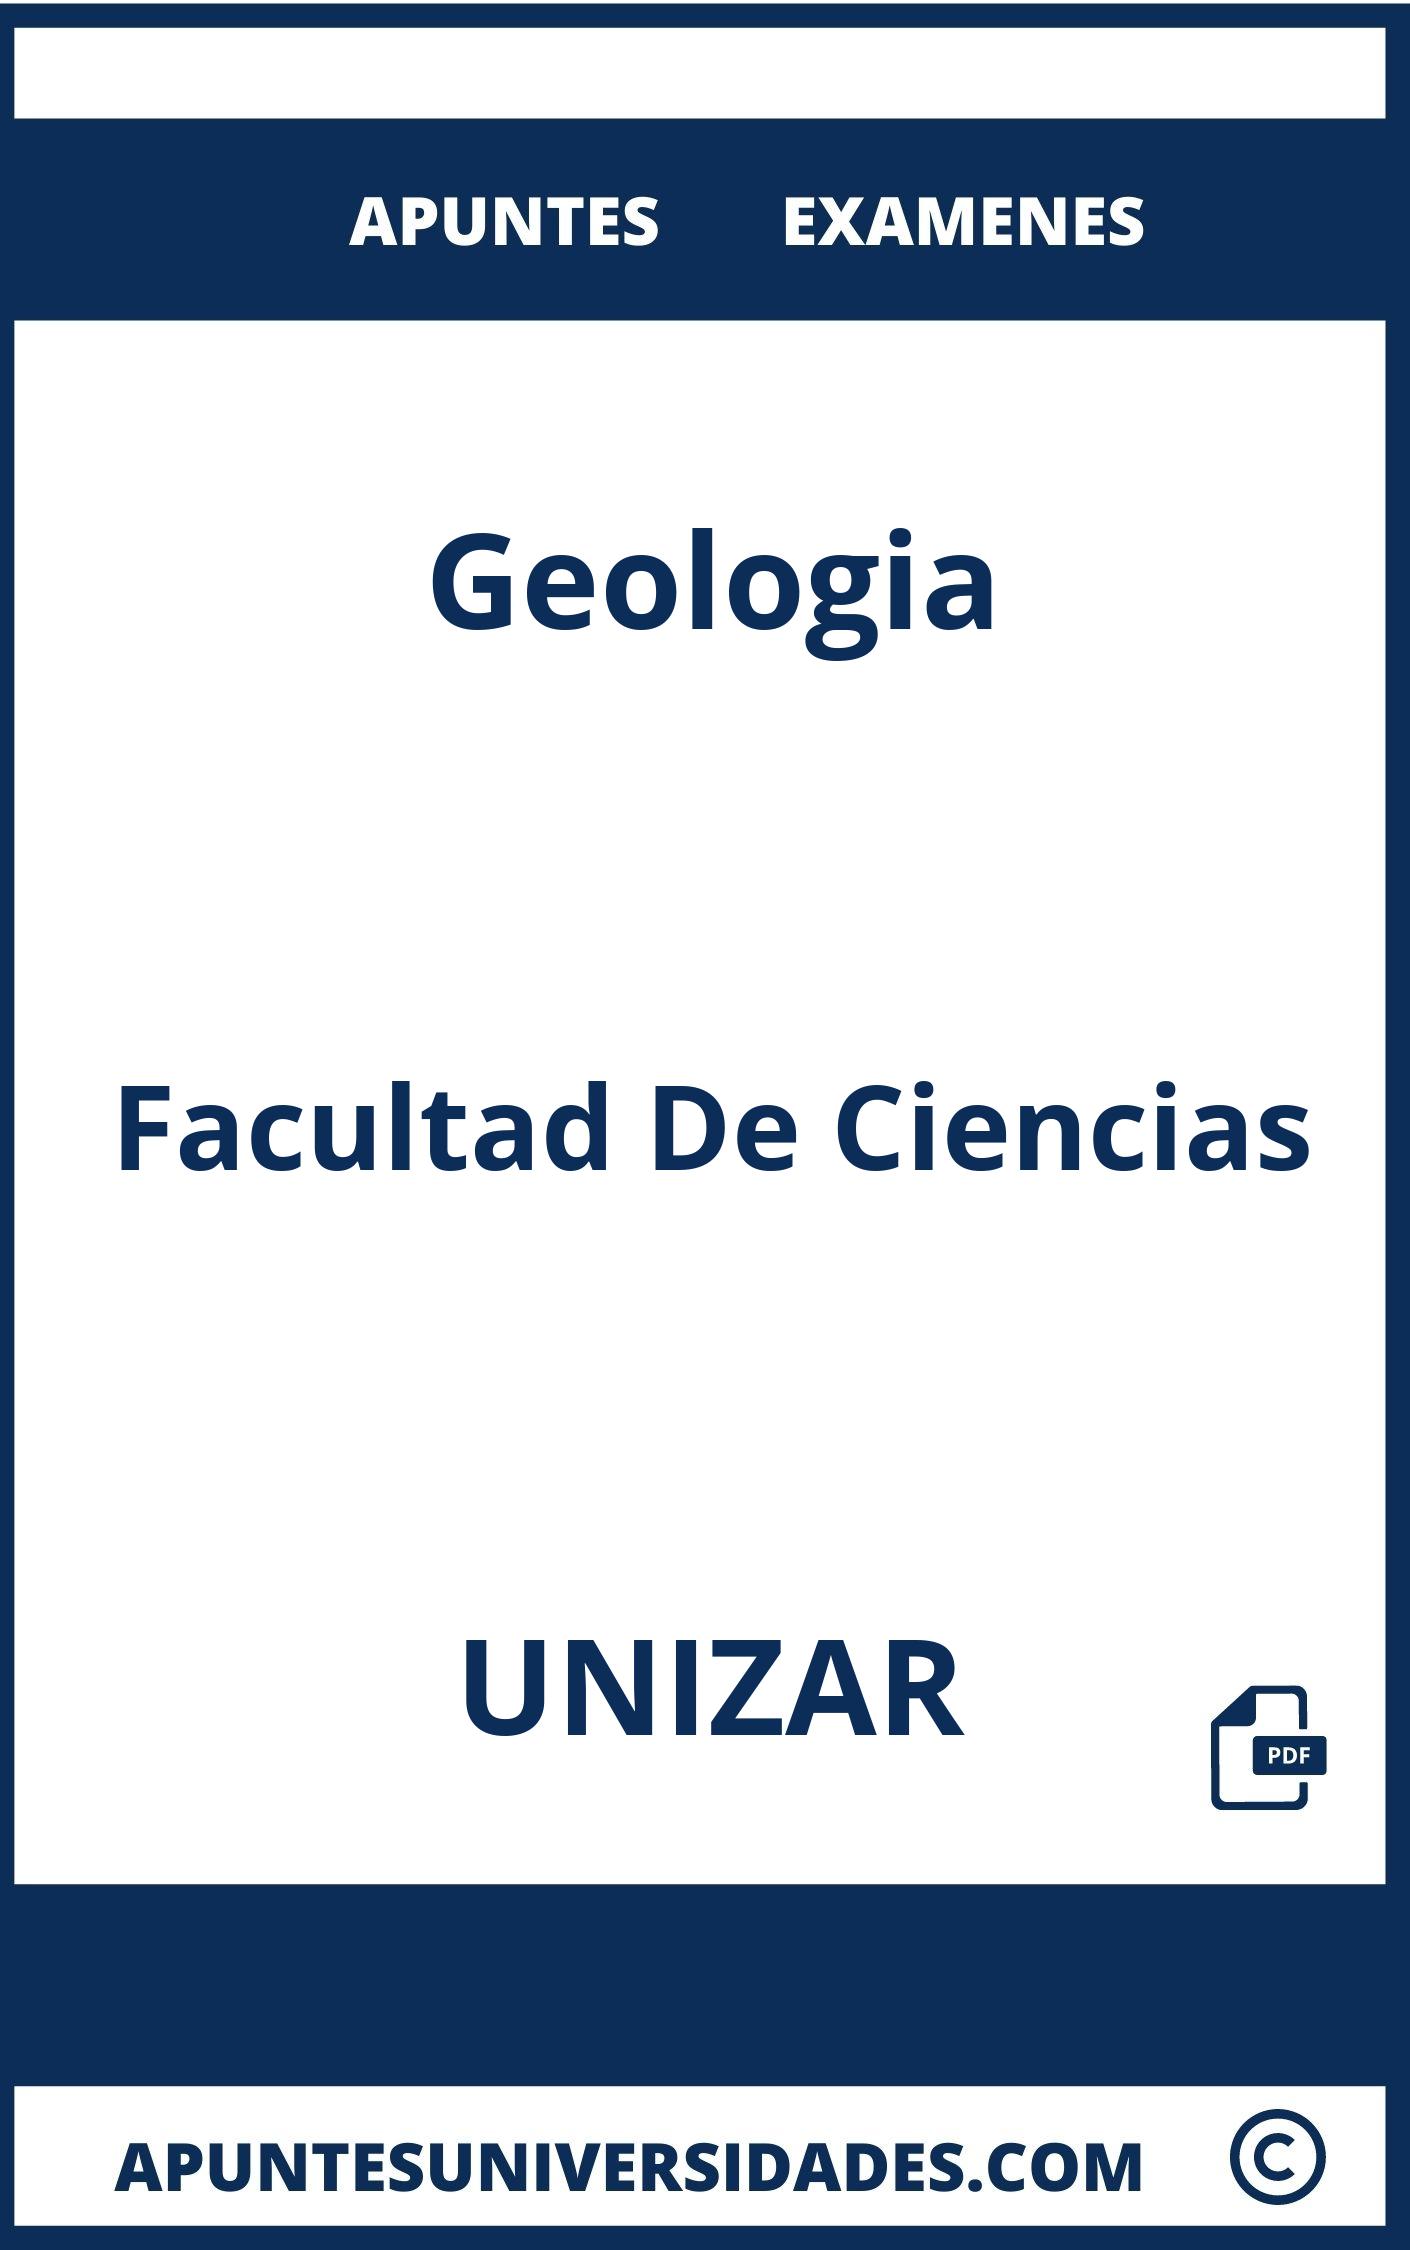 Geologia UNIZAR Examenes Apuntes